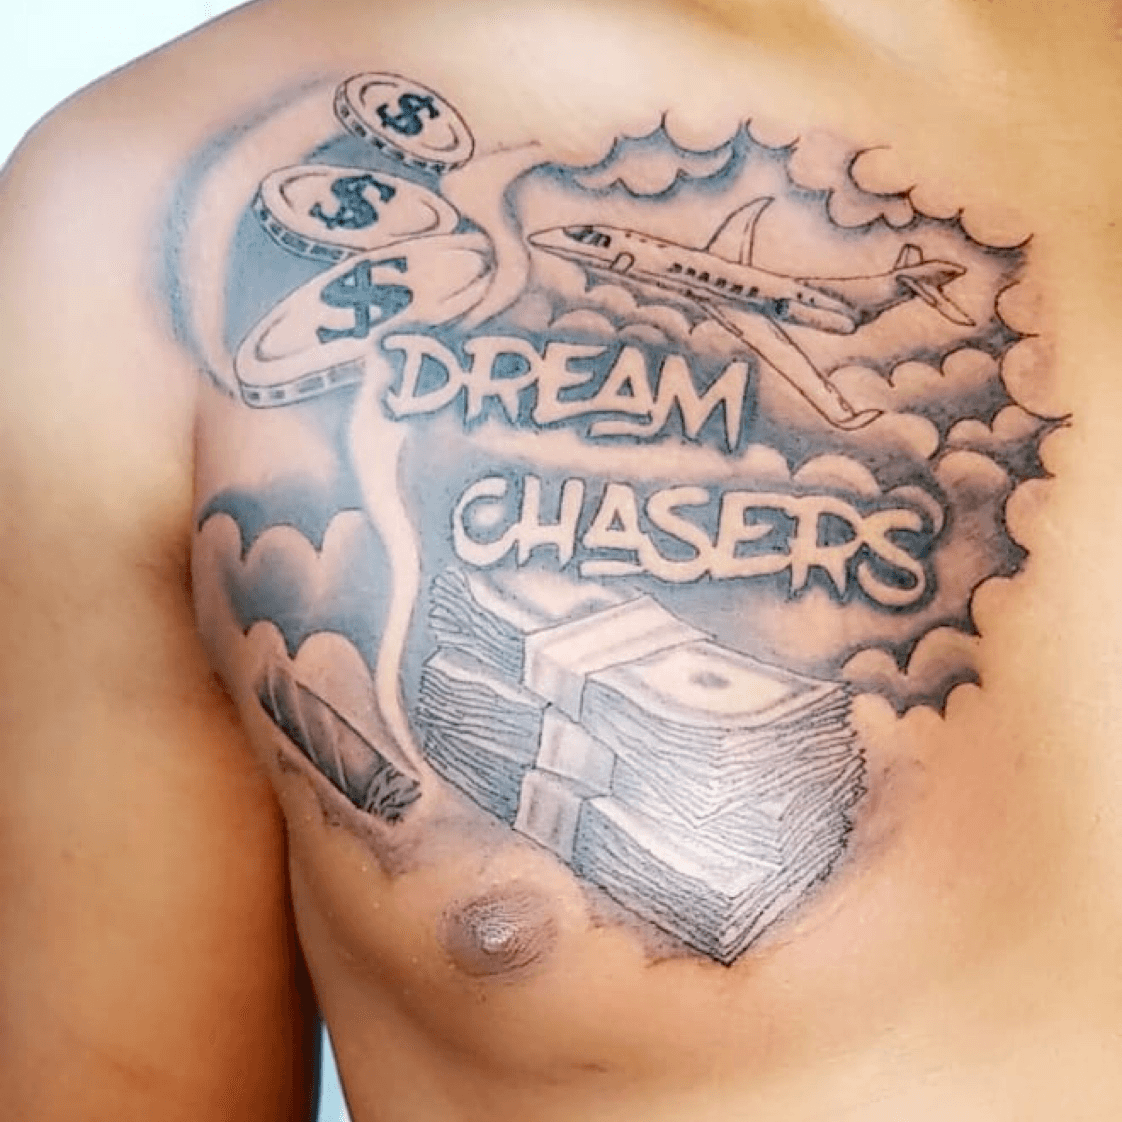 Chasing dreams tattoo  Dream tattoos Chasing dreams Tattoos